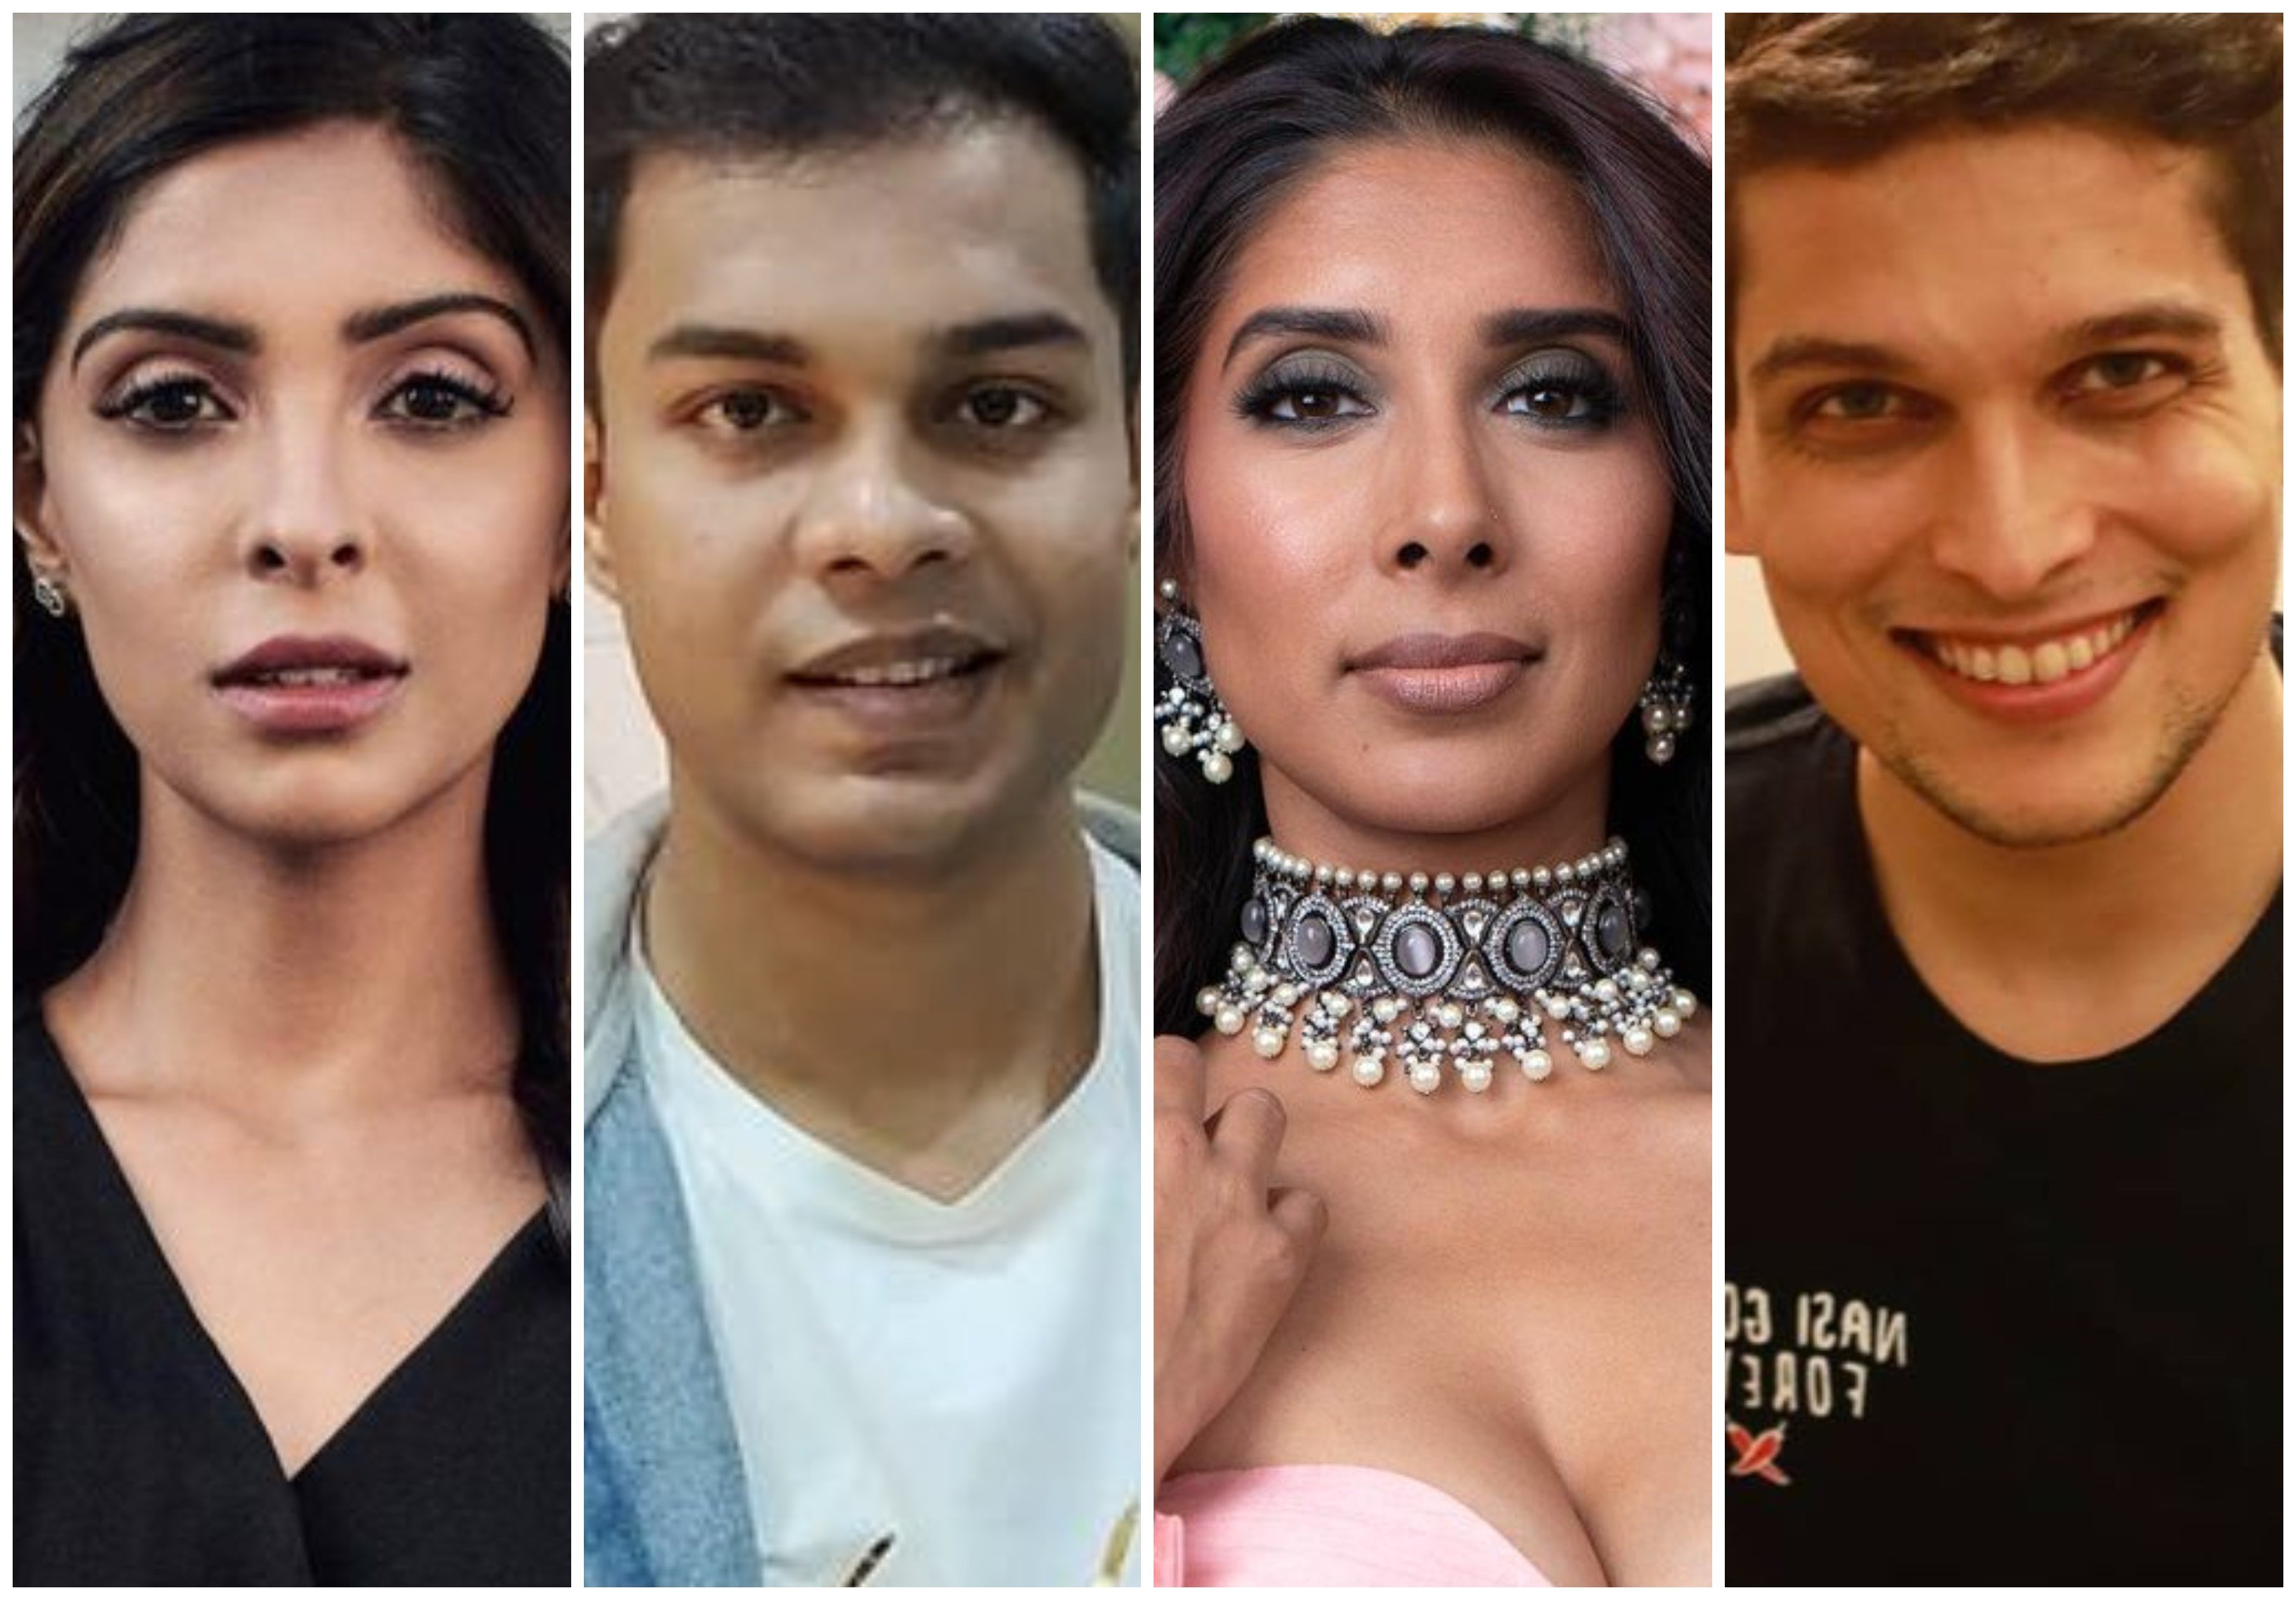 Shital Patel, Akshay Jakhete, Nadia Jagessar and Pradhyuman Maloo all star in Netflix’s Indian Matchmaking. Photos: @therealshitalpatel, @akshayjakheteofficial, @nadiajagessar, @pradhyum.m/Instagram